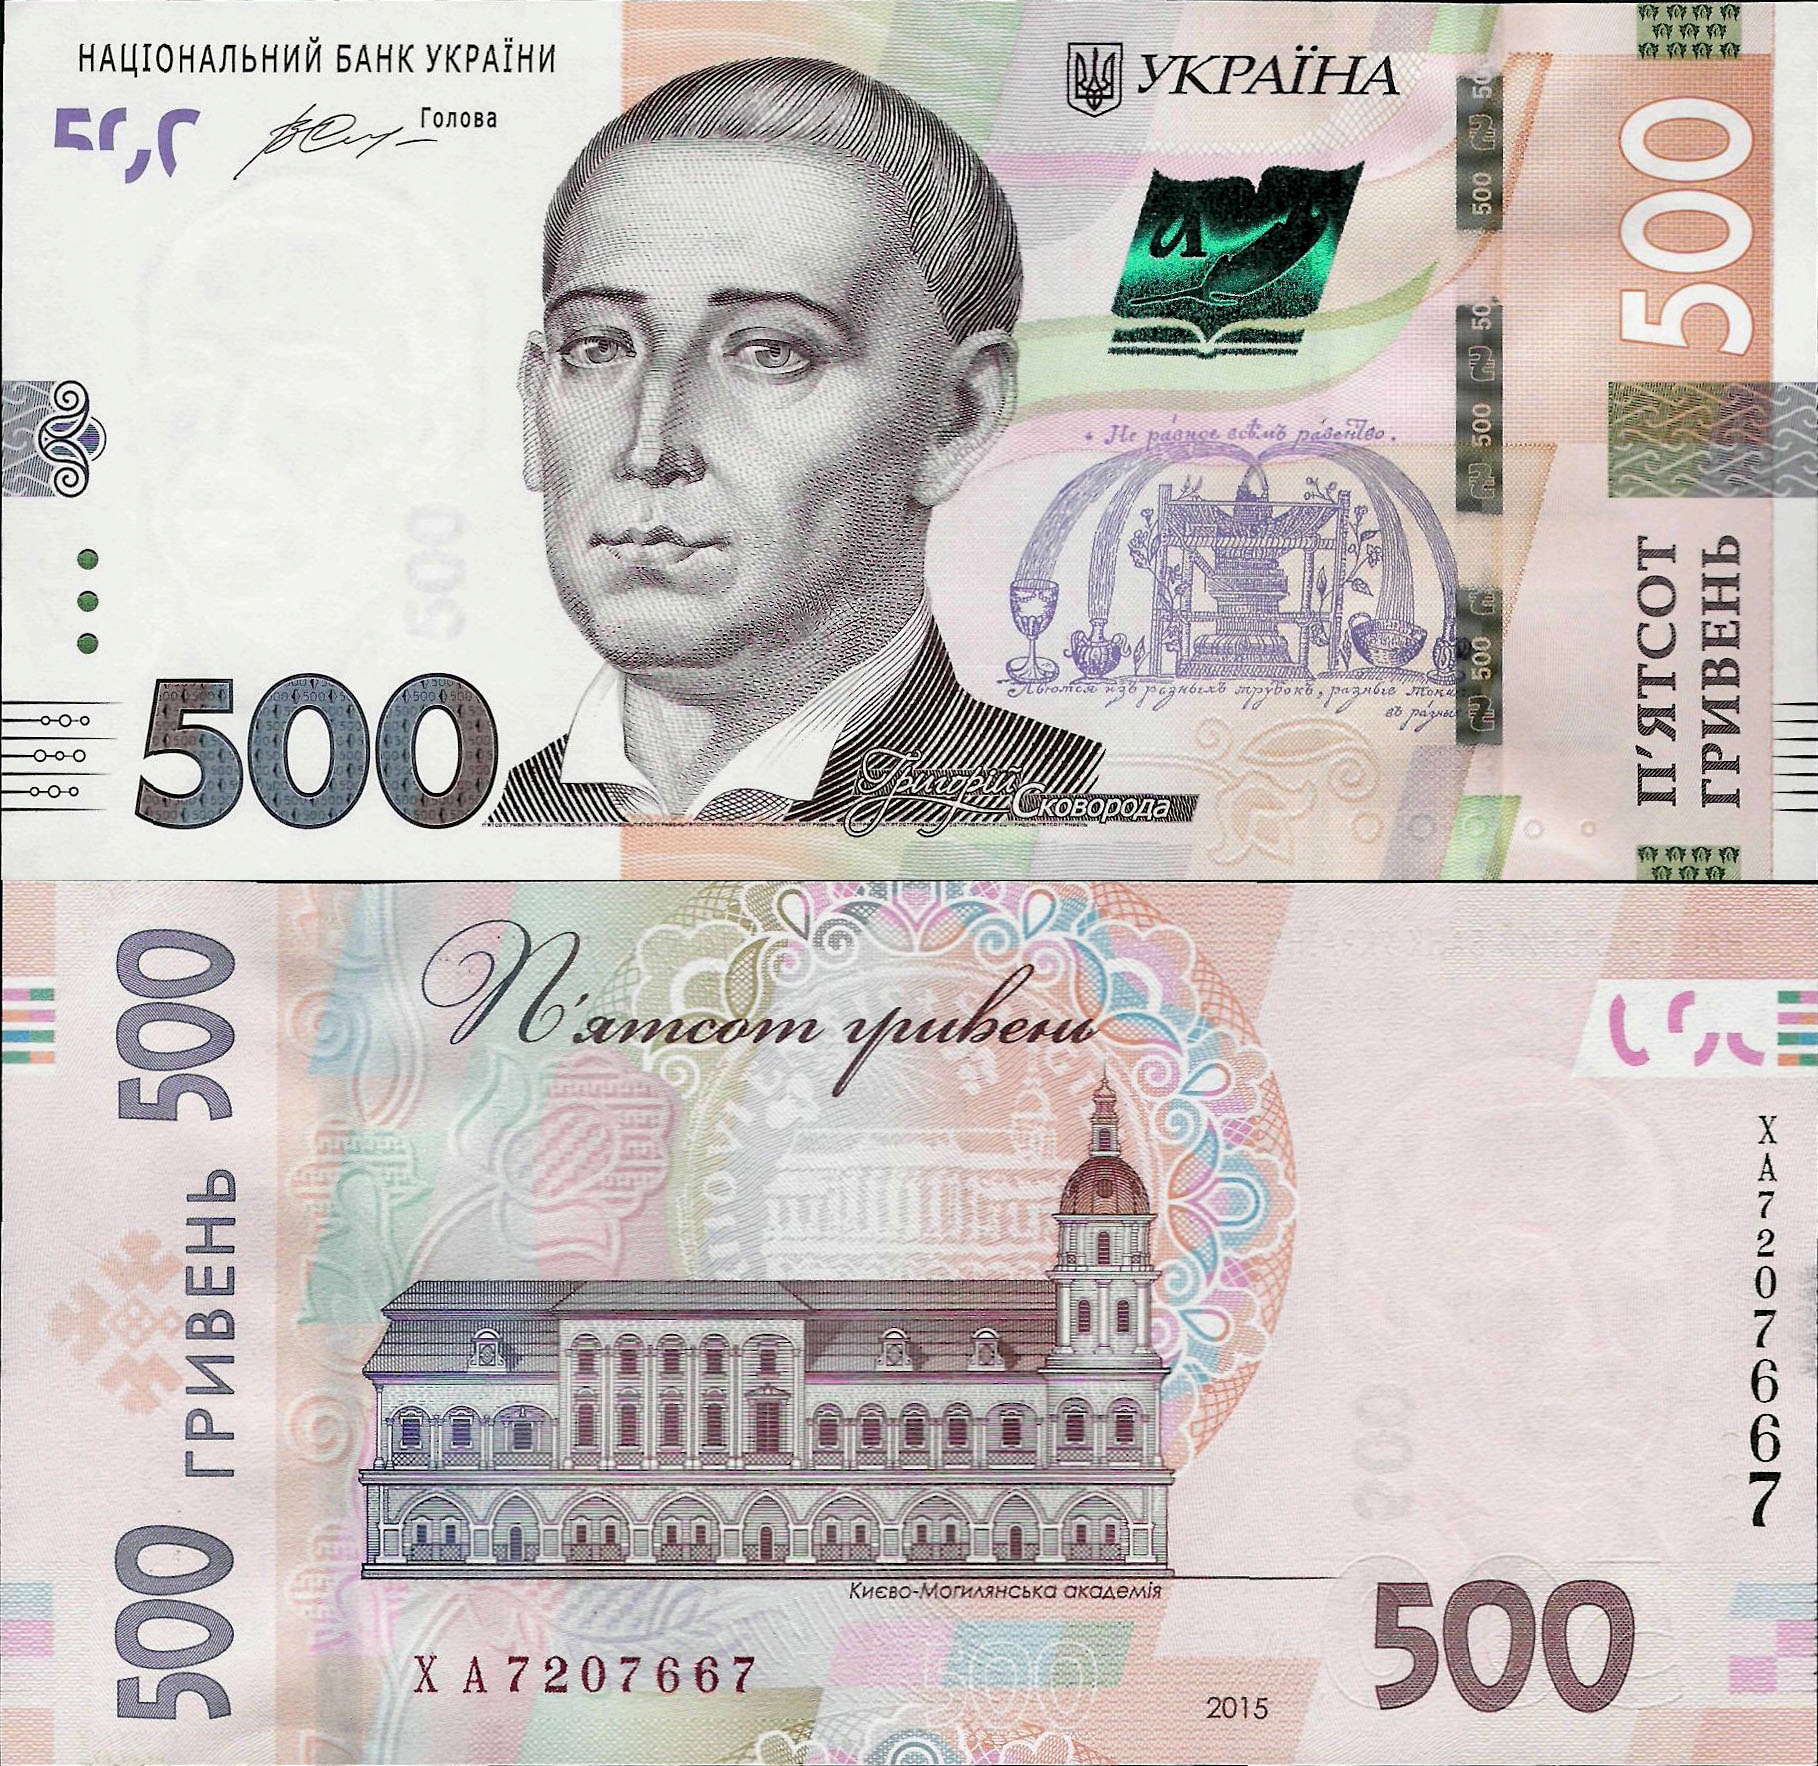 990 грн в рублях. Банкнота Украины 500 гривен. 500 Гривен купюра.